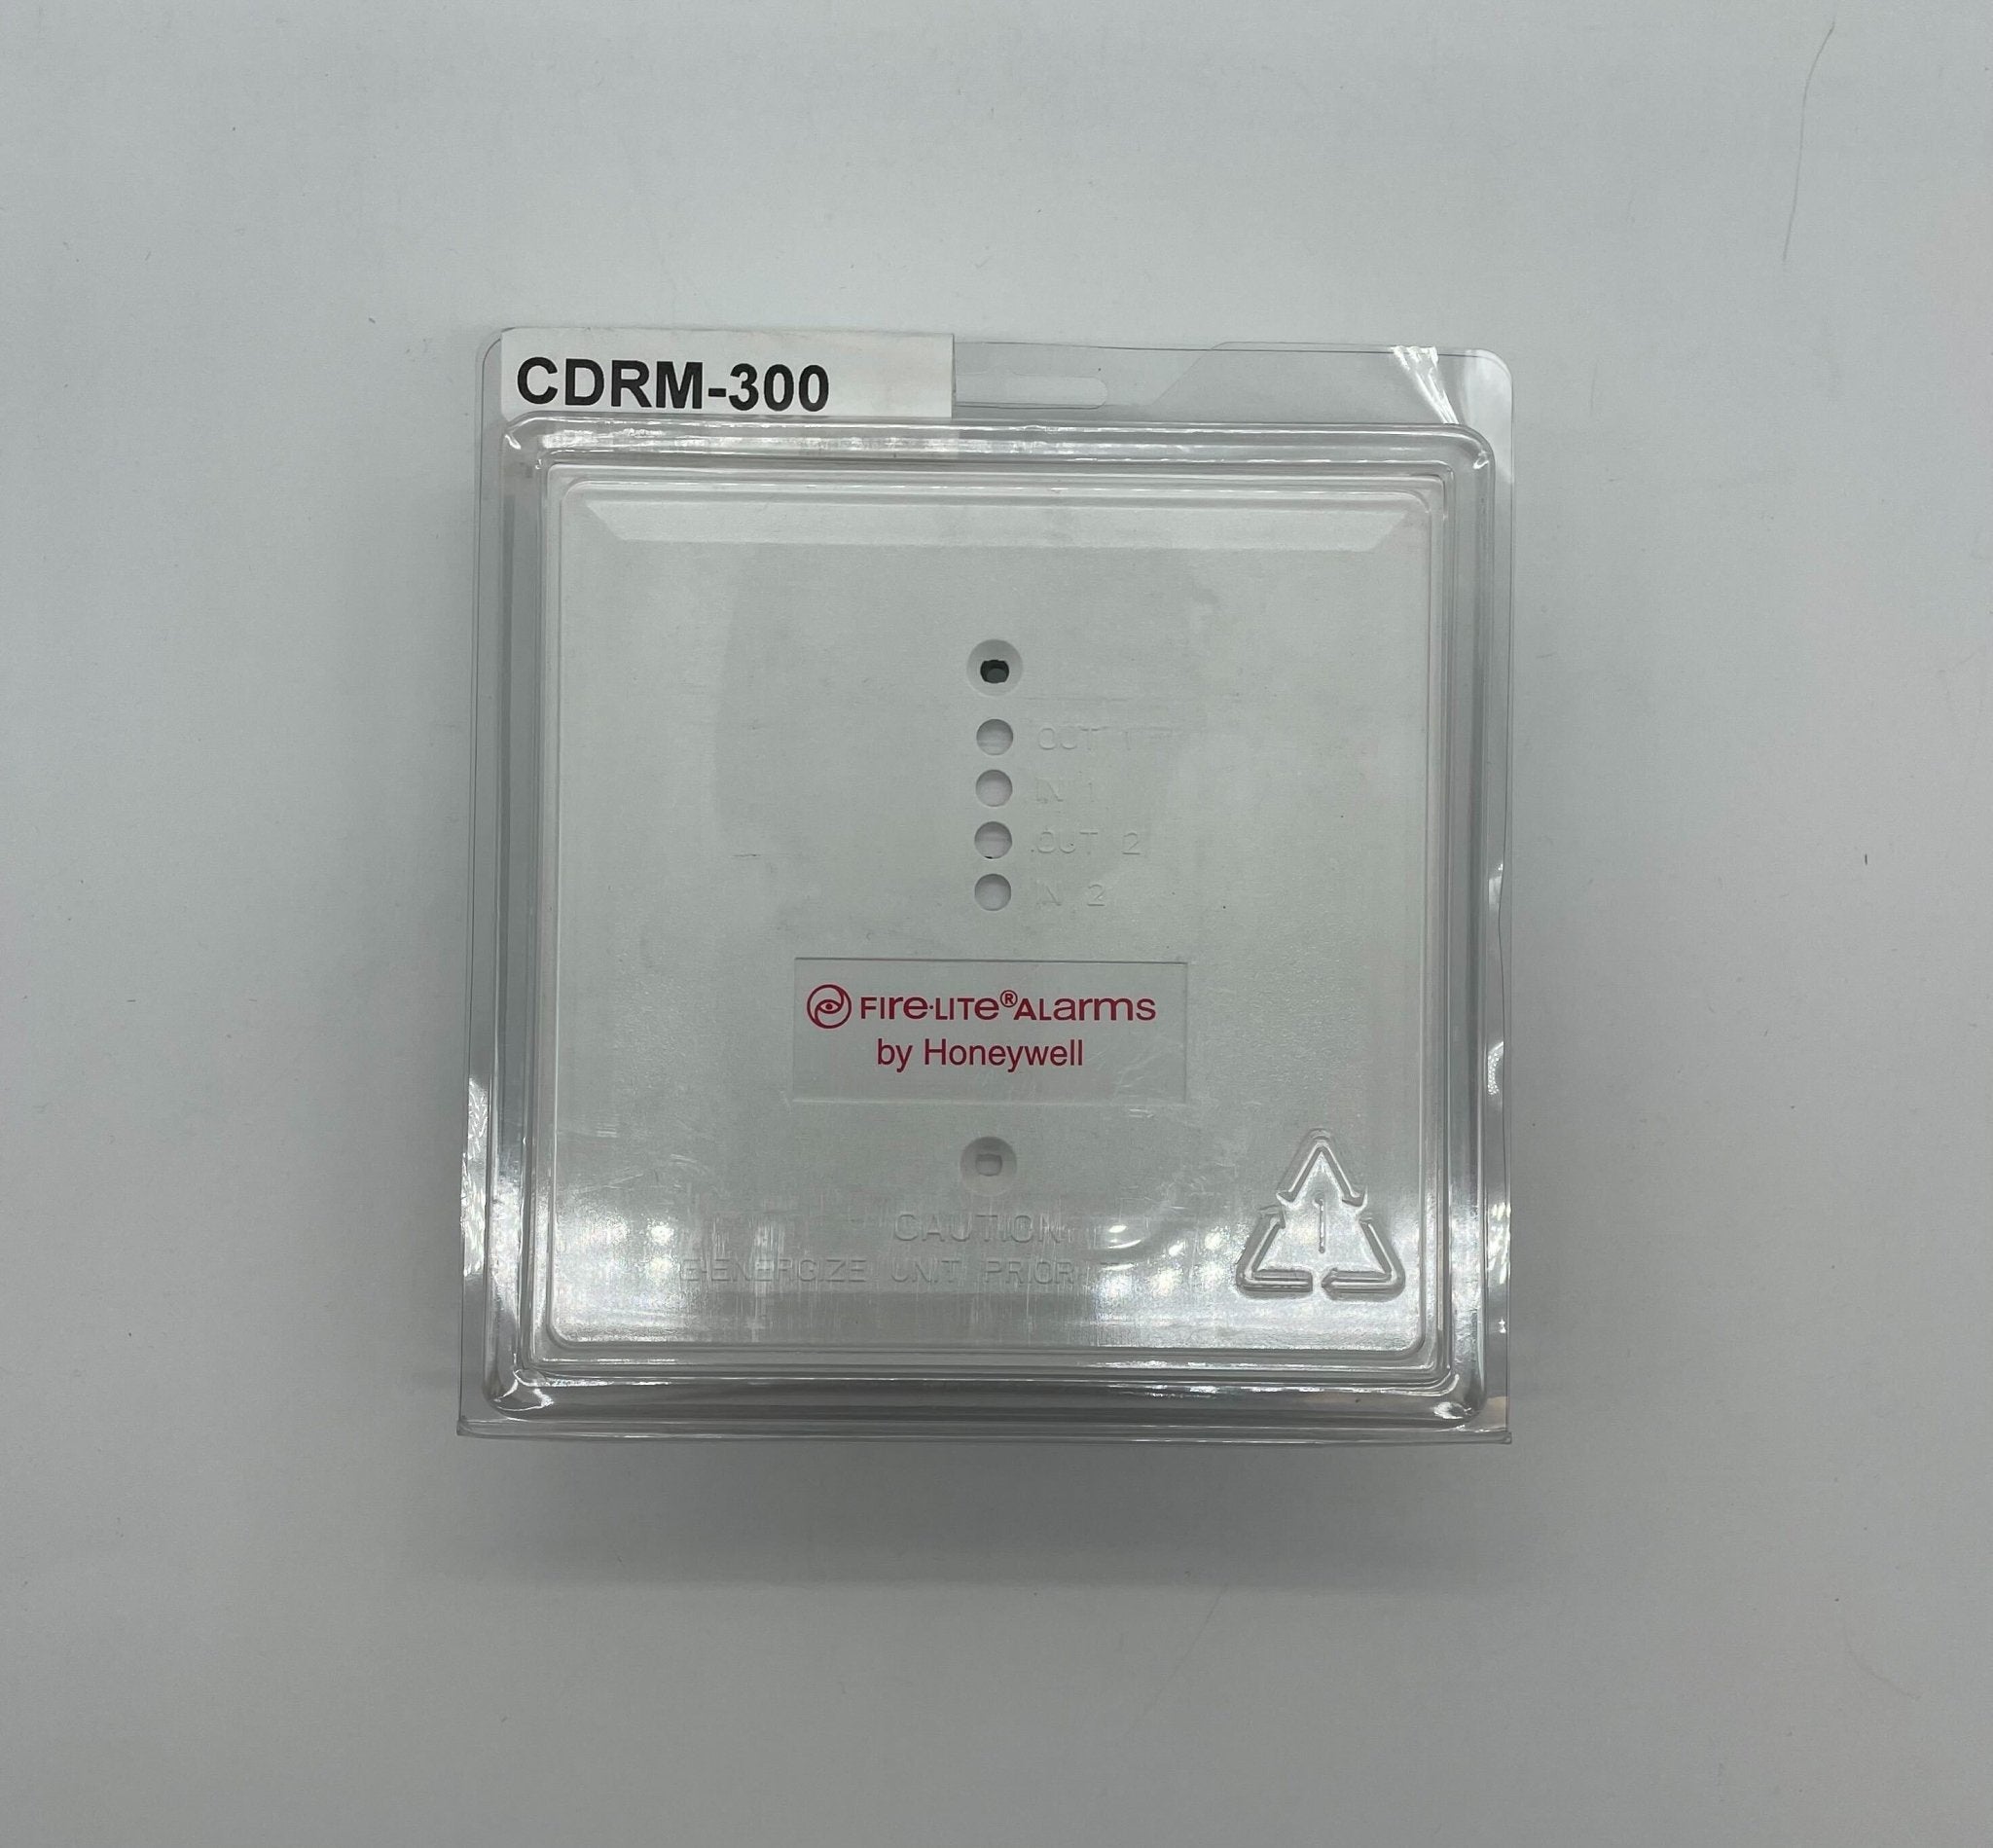 Firelite CDRM-300 - The Fire Alarm Supplier